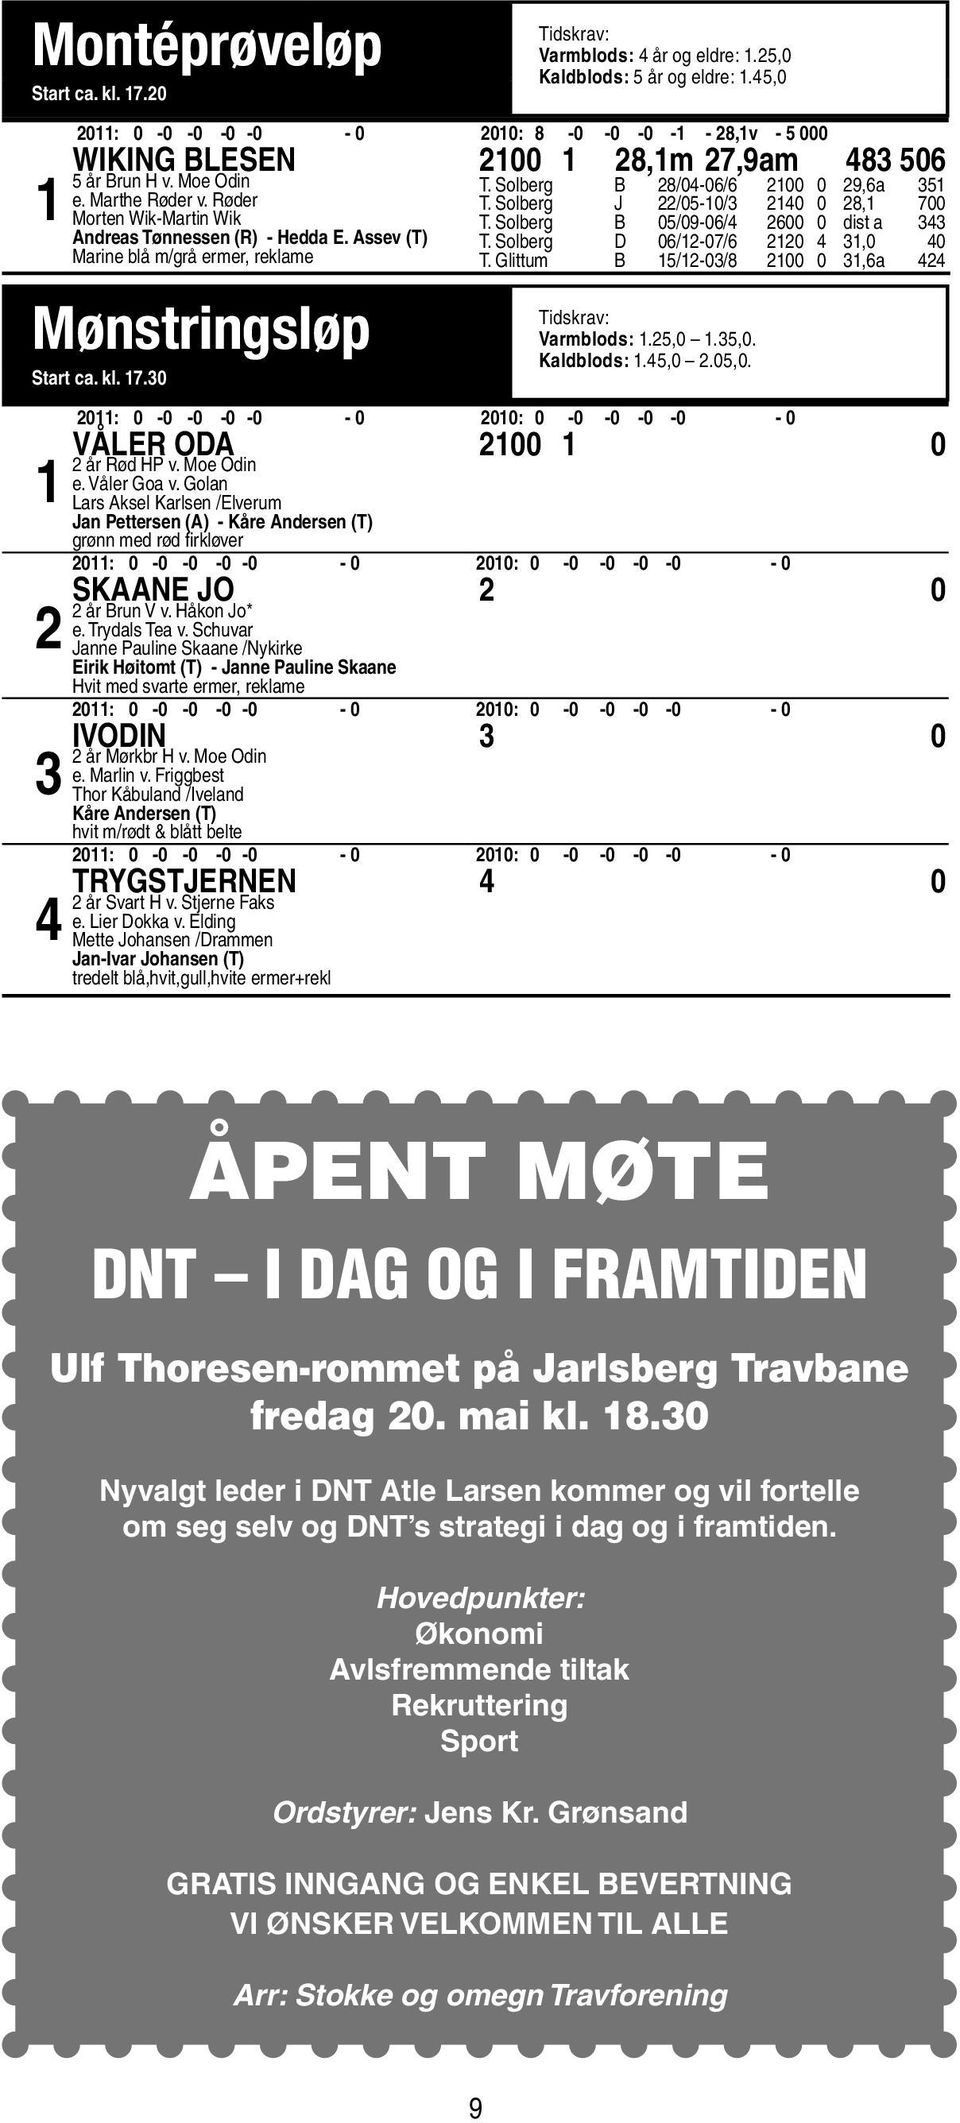 Røder Morten Wik-Martin Wik Andreas Tønnessen (R) - Hedda E. Assev (T) Marine blå m/grå ermer, reklame Mønstringsløp Start ca. kl. 17.30 1 2 3 4 T. Solberg B 28/04-06/6 2100 0 29,6a 351 T.